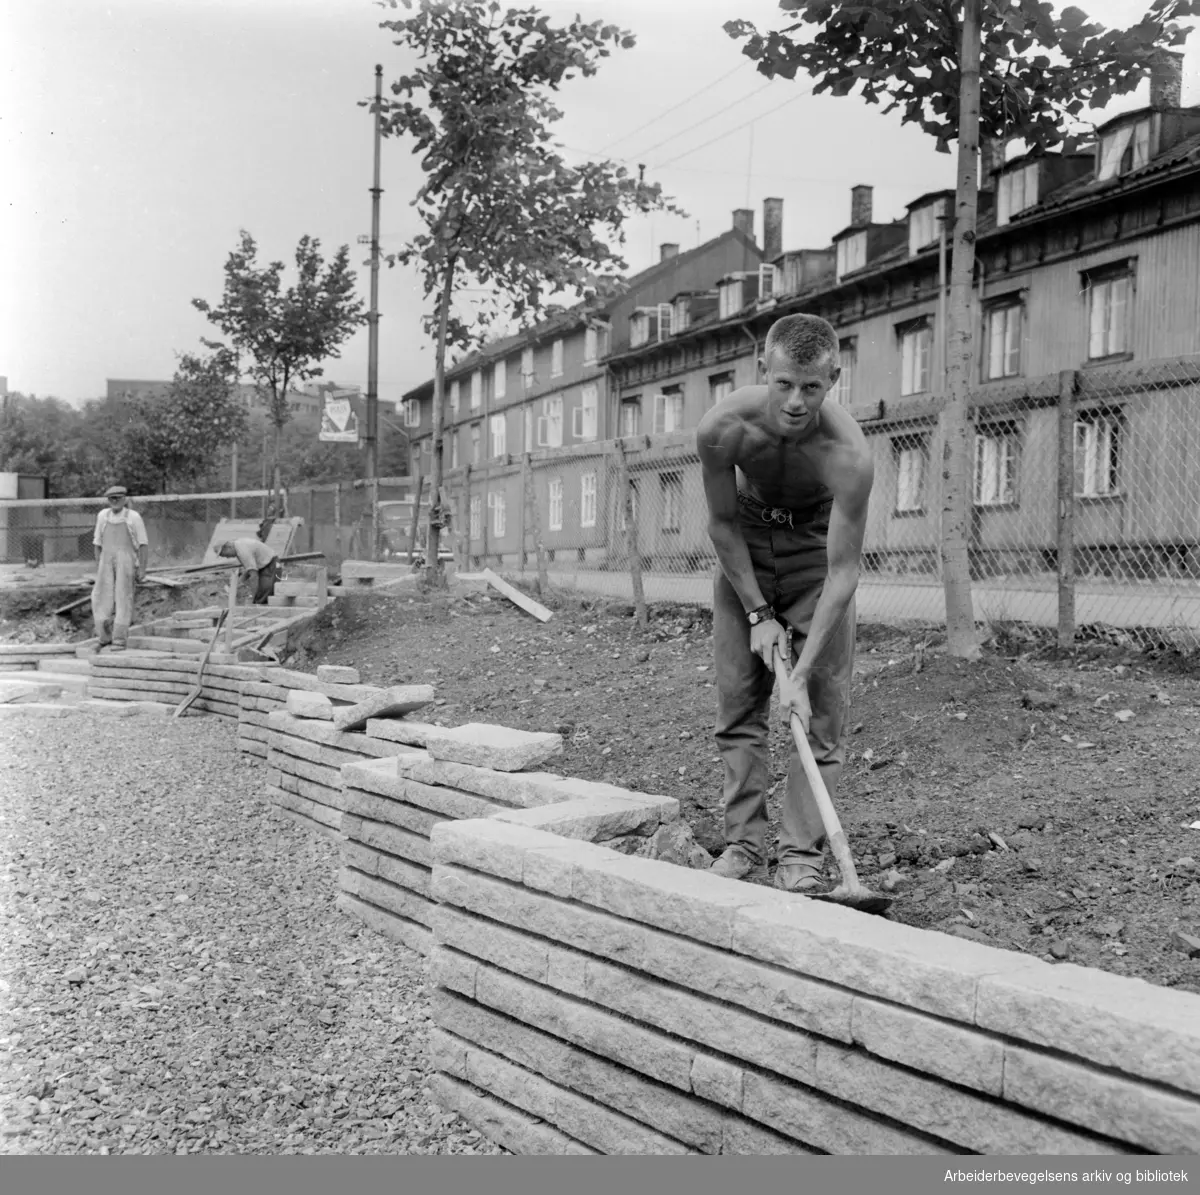 Throne Holst plass. August 1959